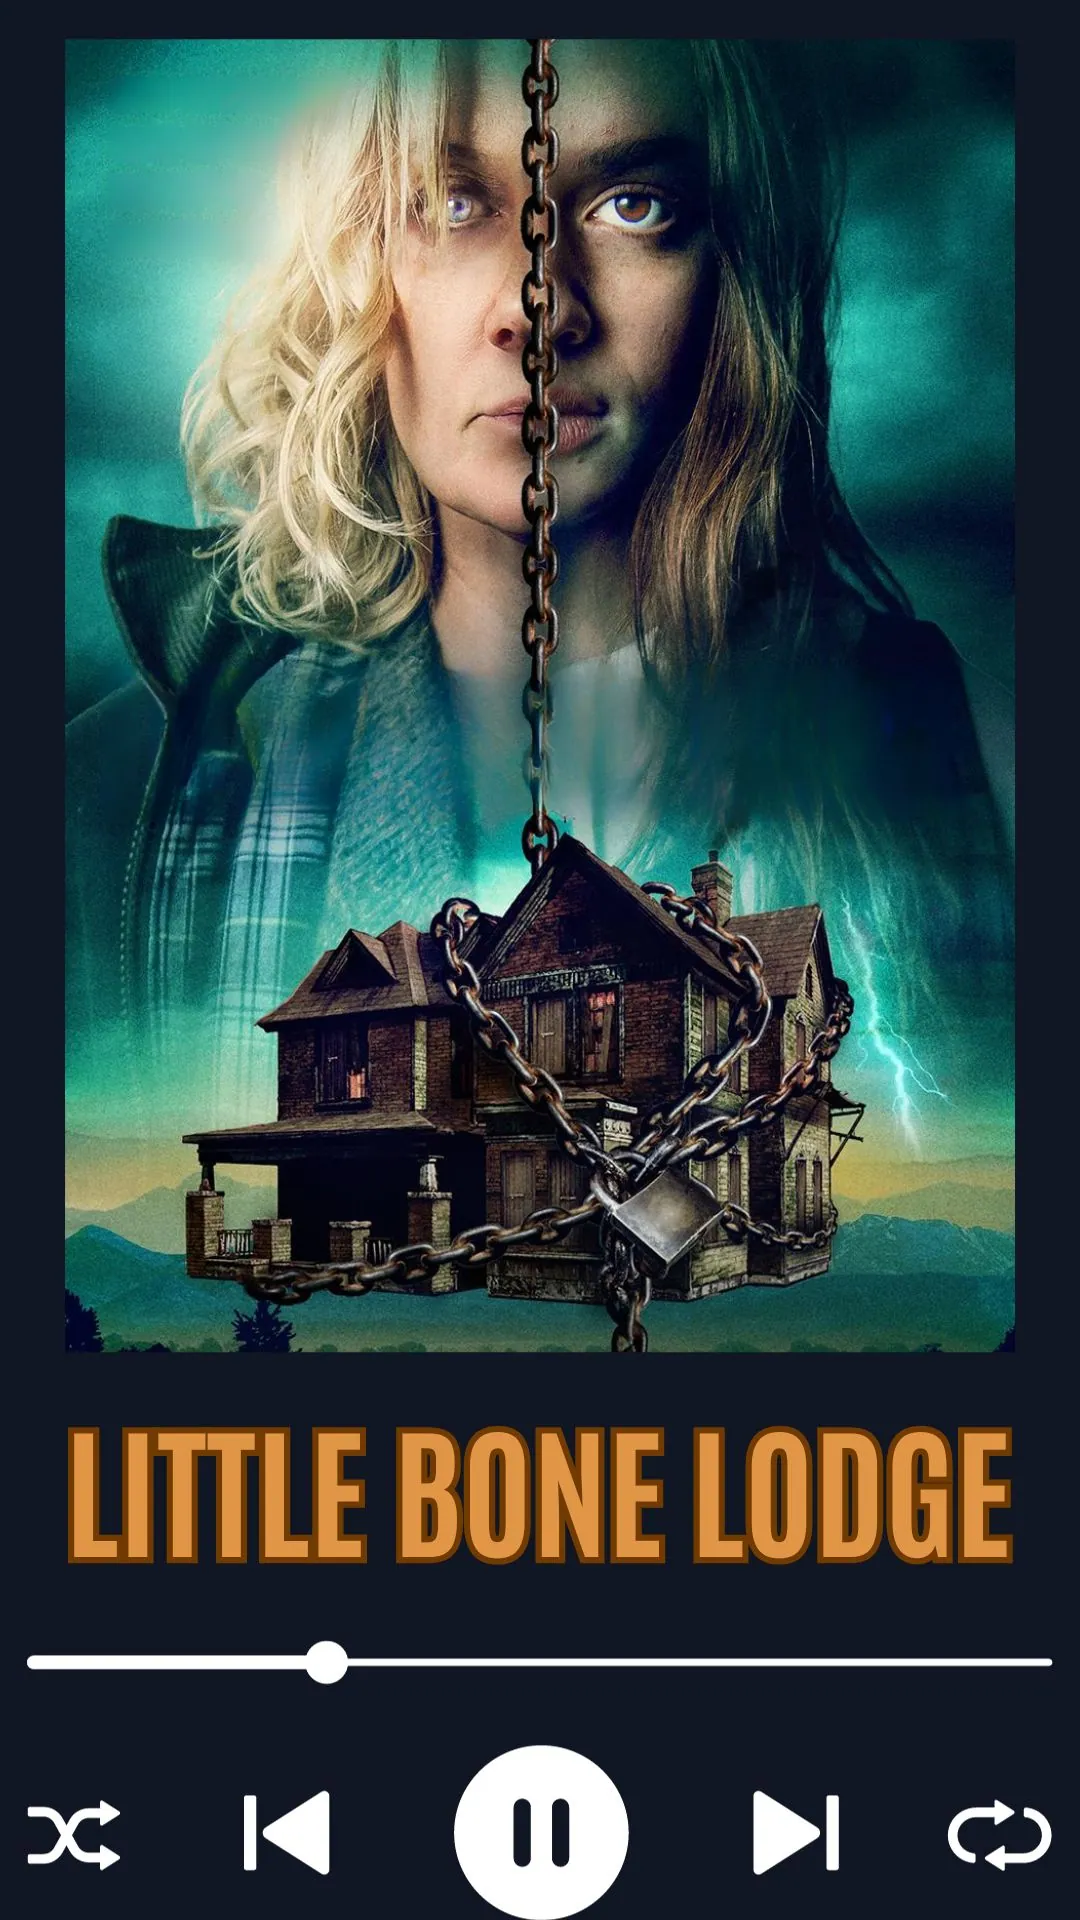 Little Bone Lodge soundtrack